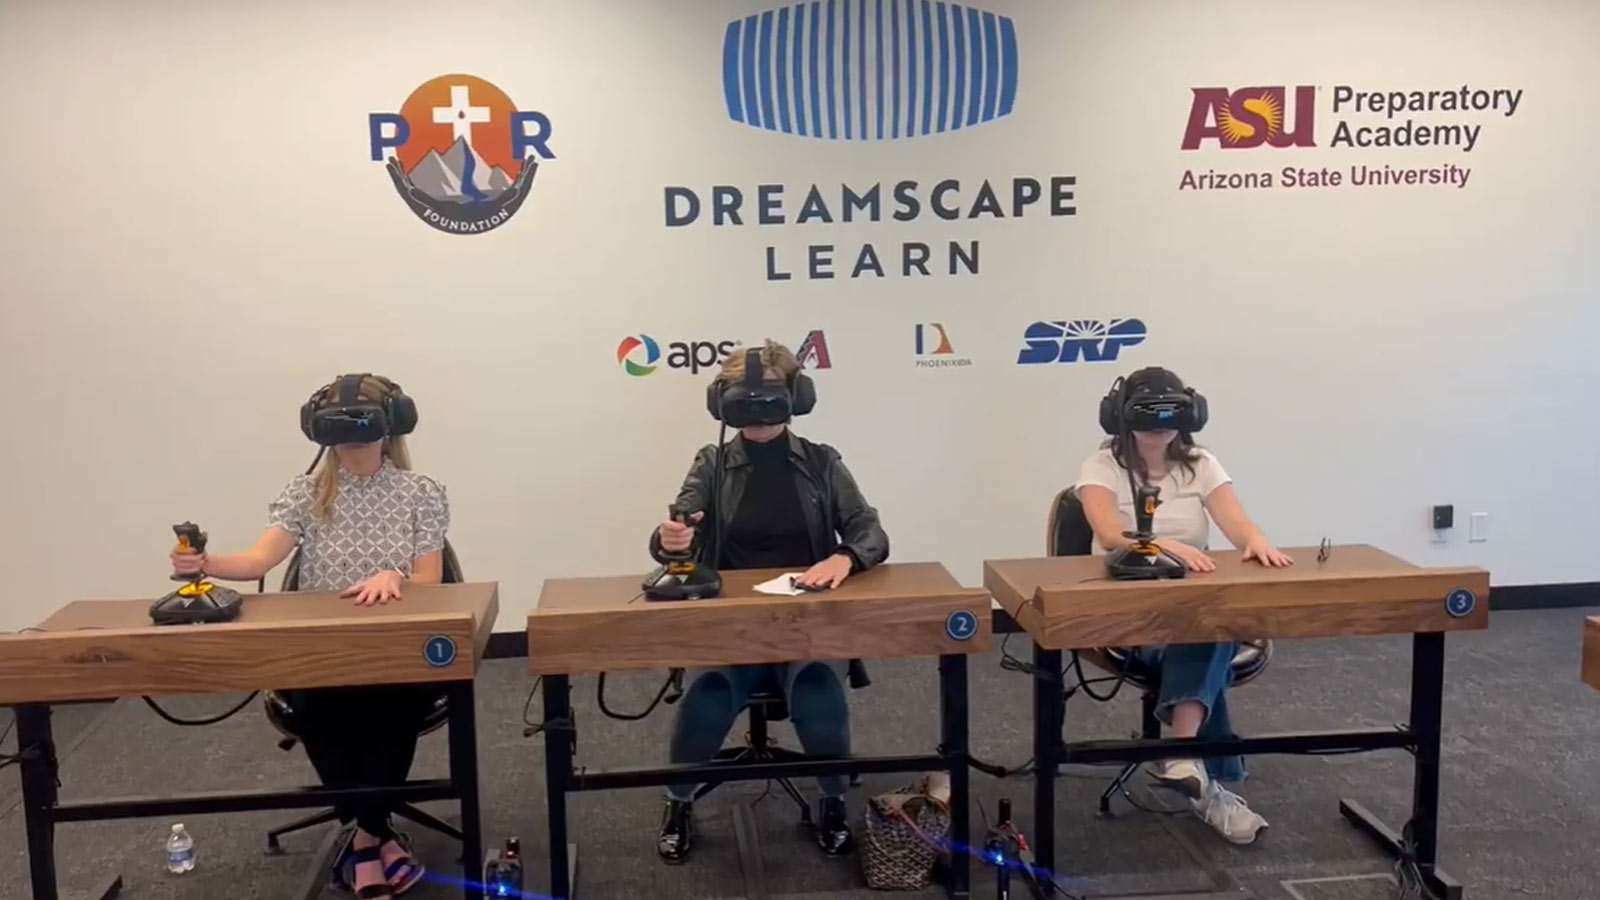 Dreamscape Learn VR platform now available at ASU Prep Pilgrim Rest